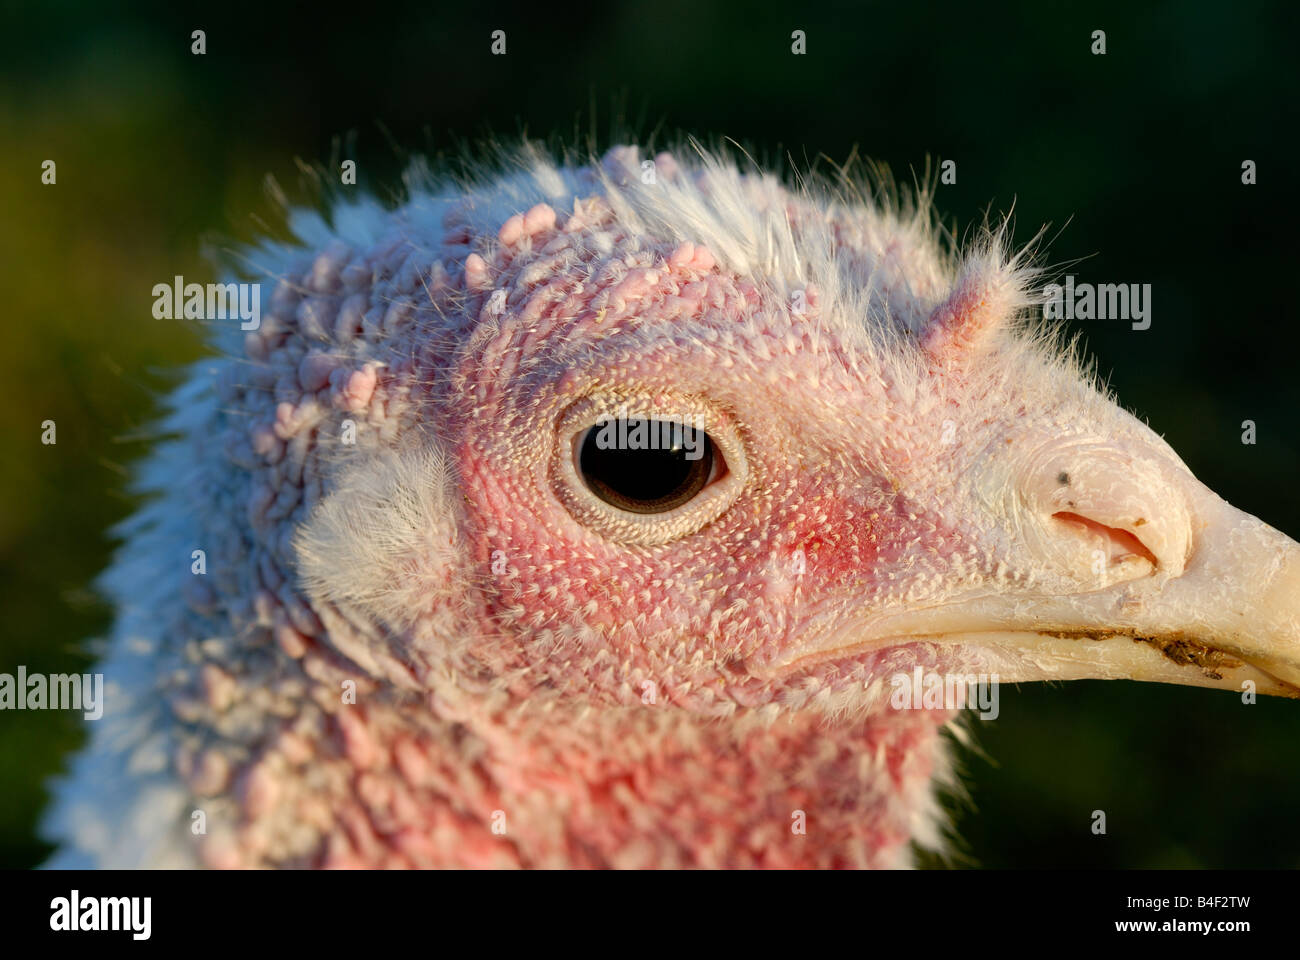 Stock photo of a white domestic Turkeys head Stock Photo